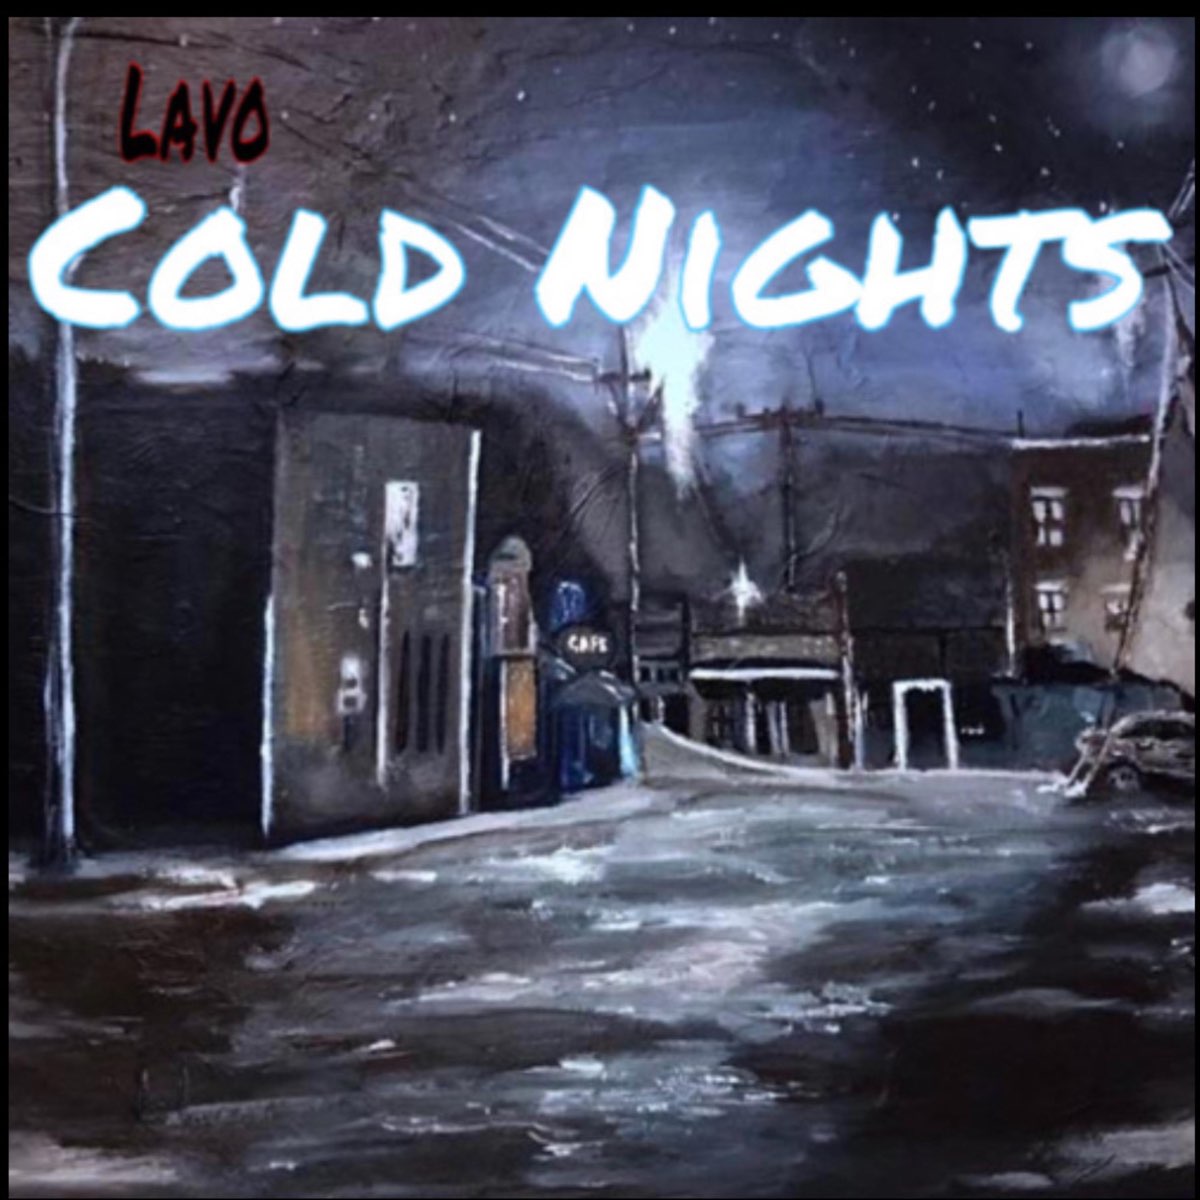 Qty Cold Nights. Cold Night. Cold nights 3